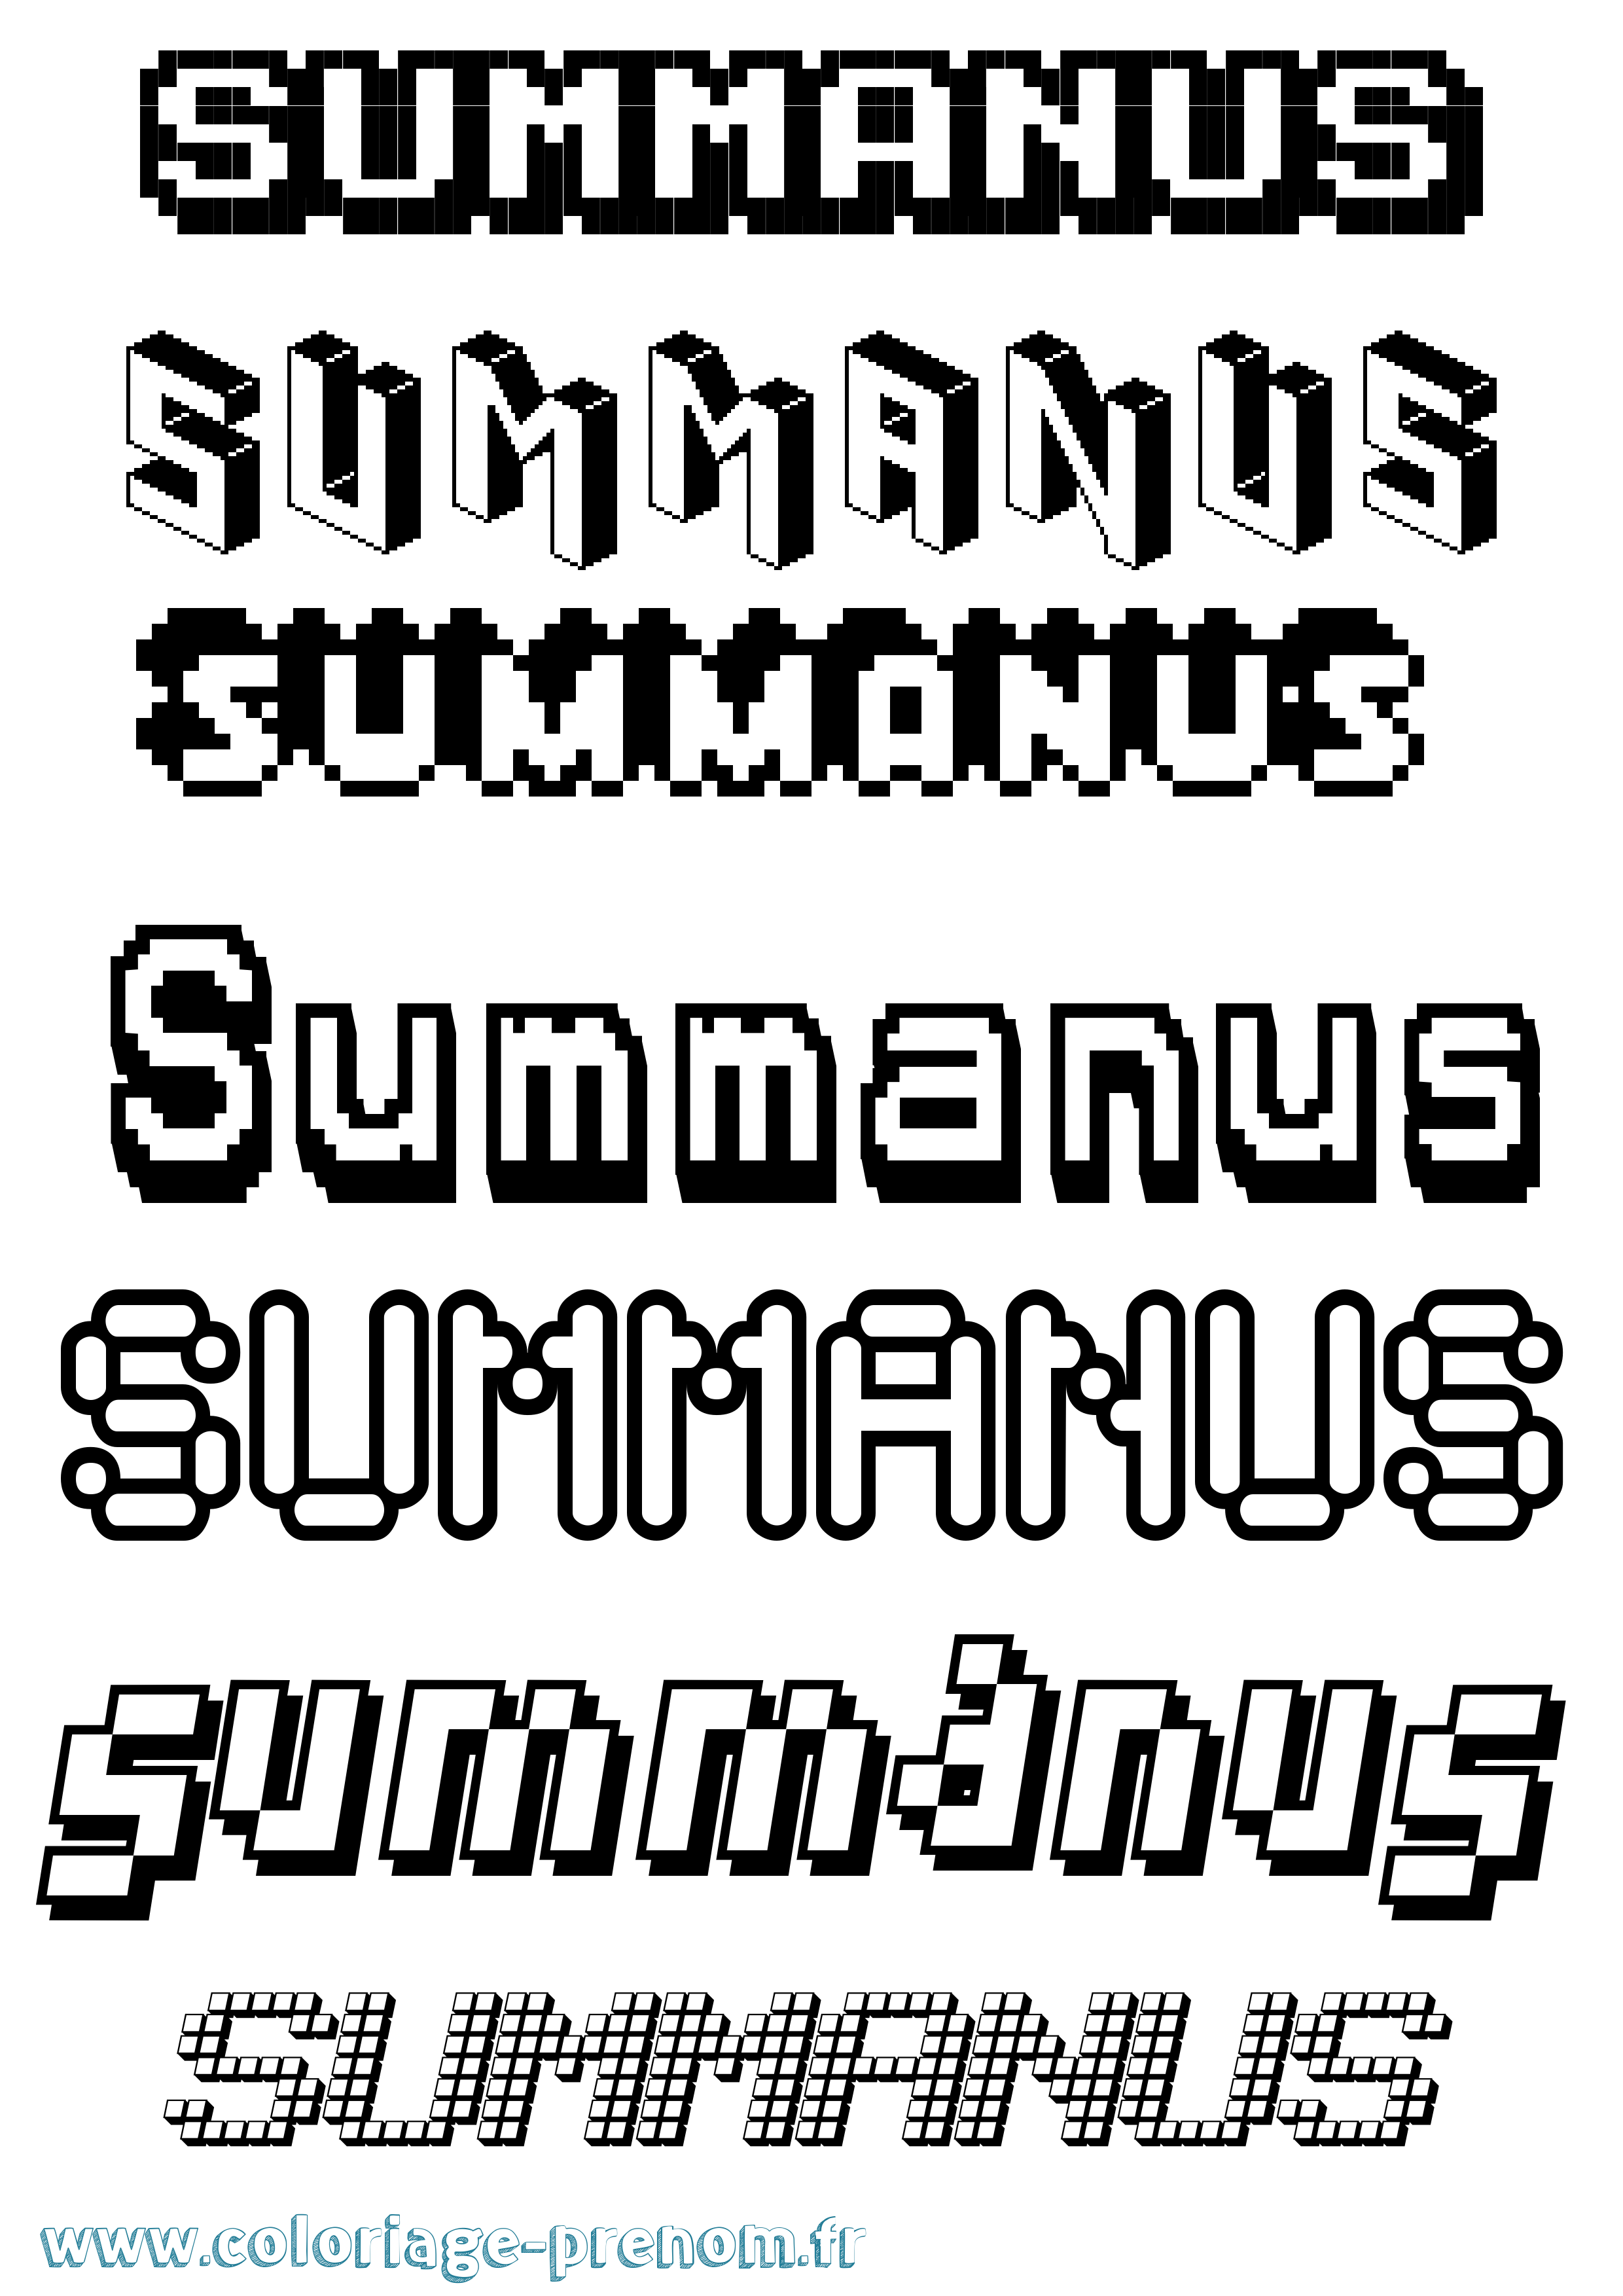 Coloriage prénom Summanus Pixel